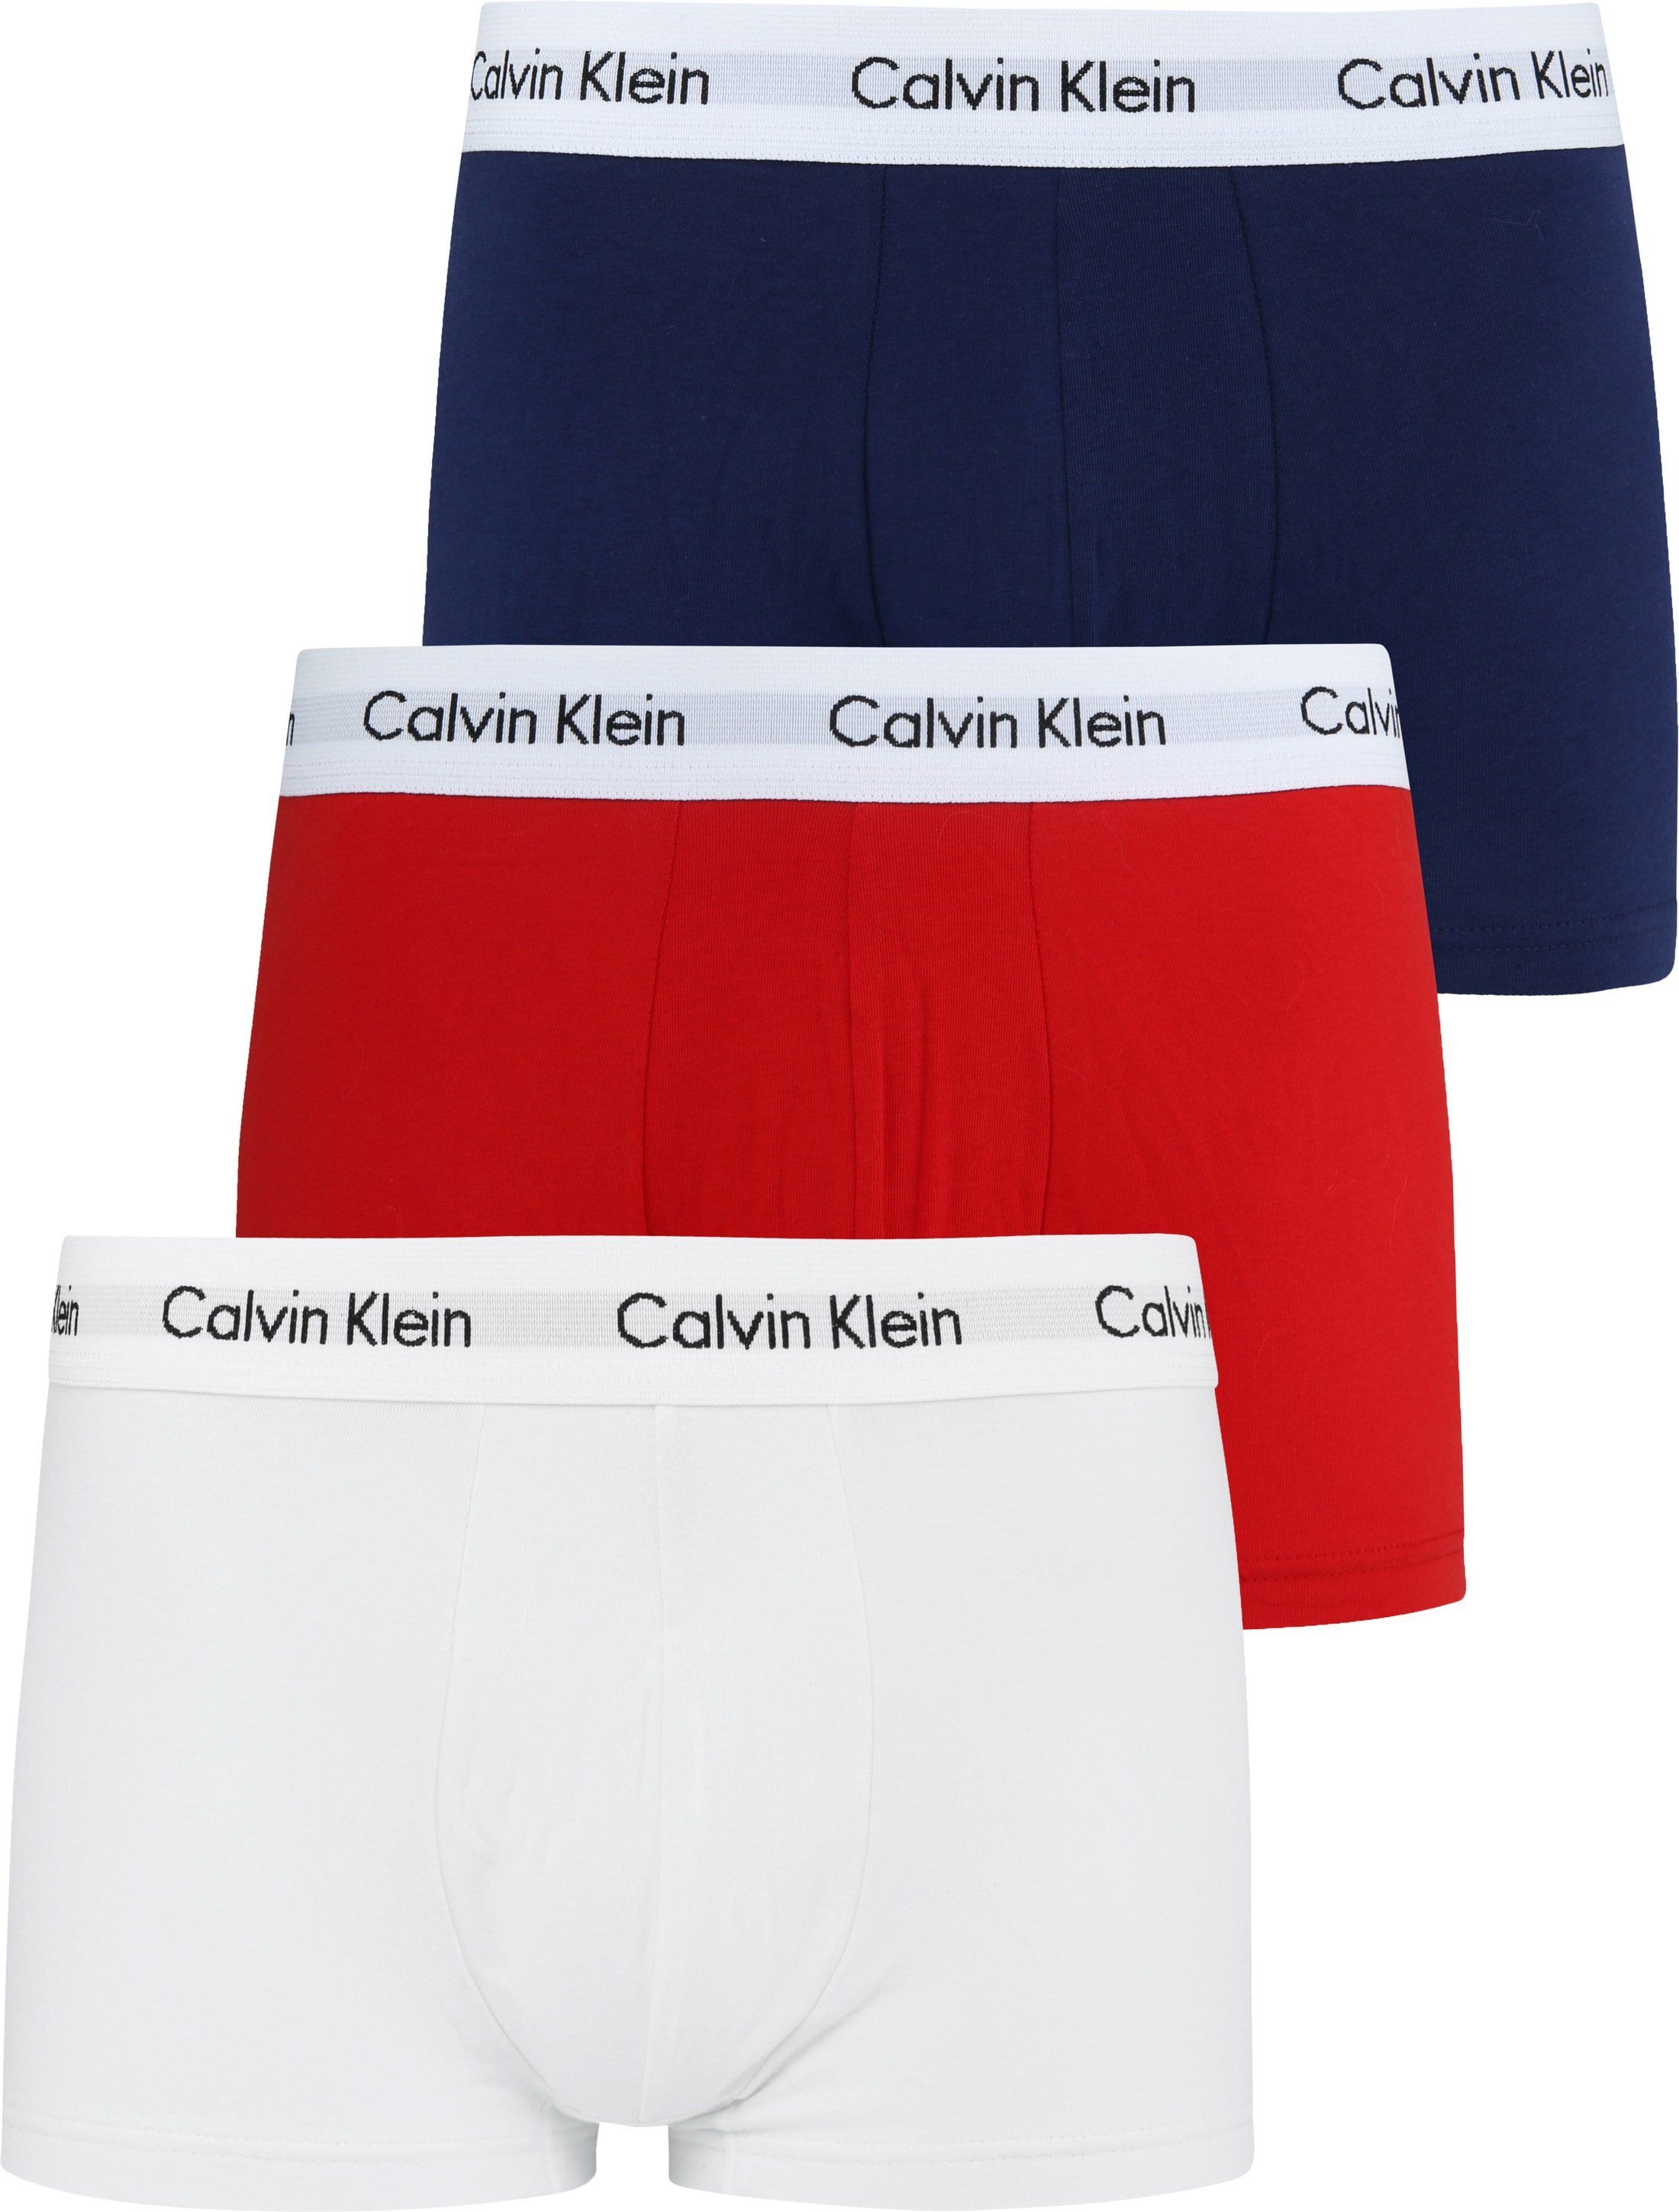 Calvin Klein Boxer Shorts Low Rise 3-Pack Dark Blue White Black Blue size XL